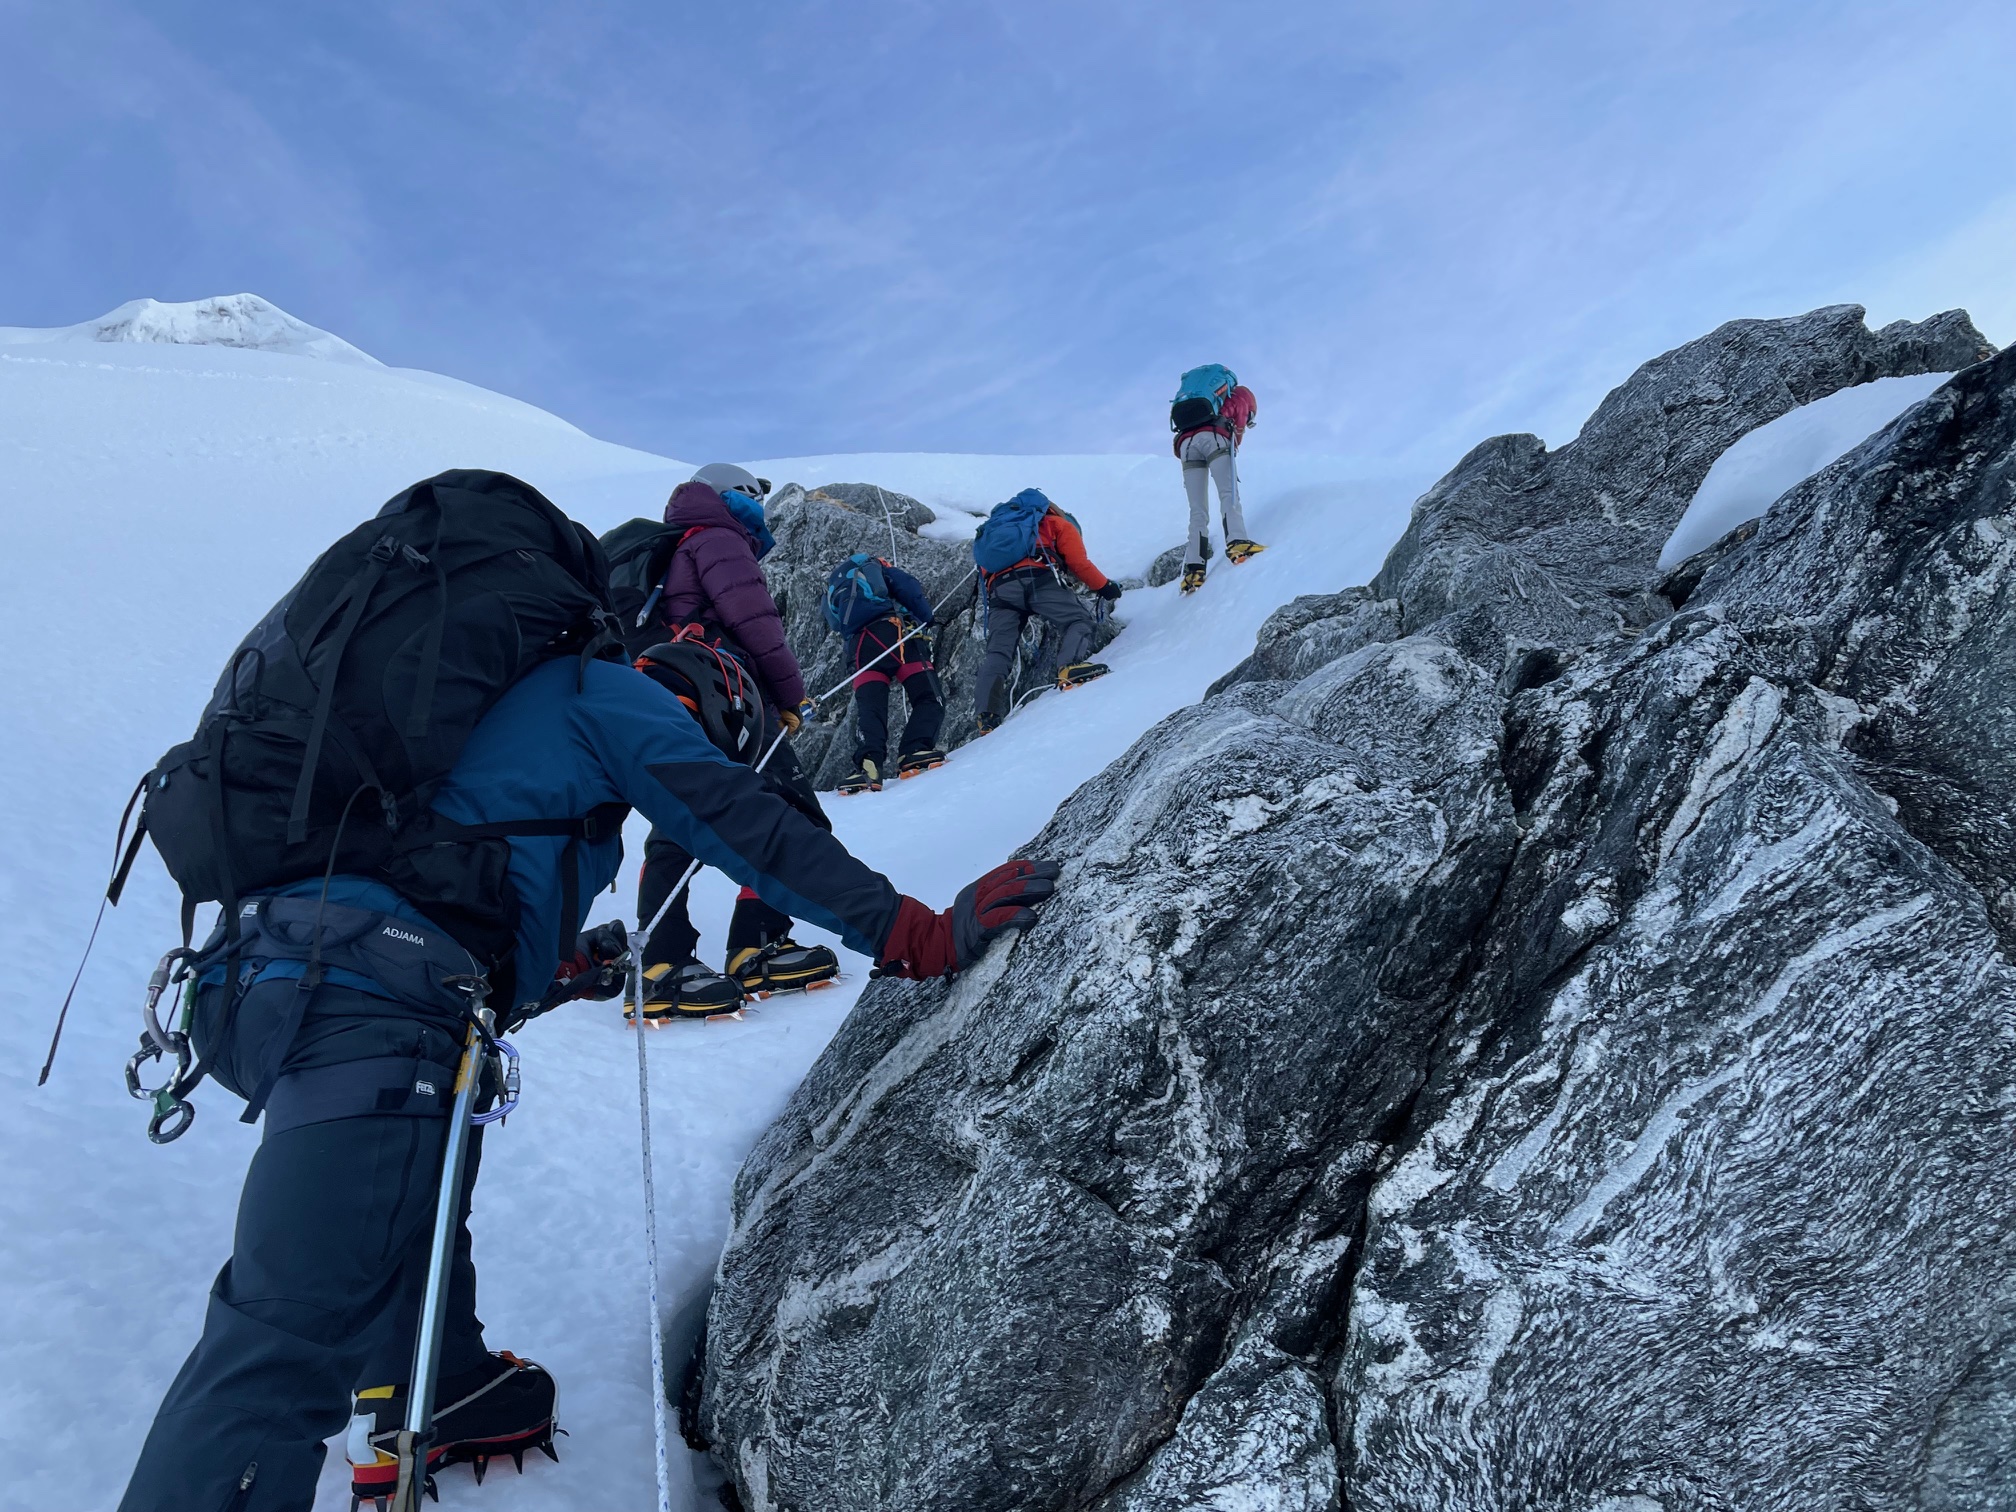 Training for Lobuche Peak: Essential Tips for a Successful Climb